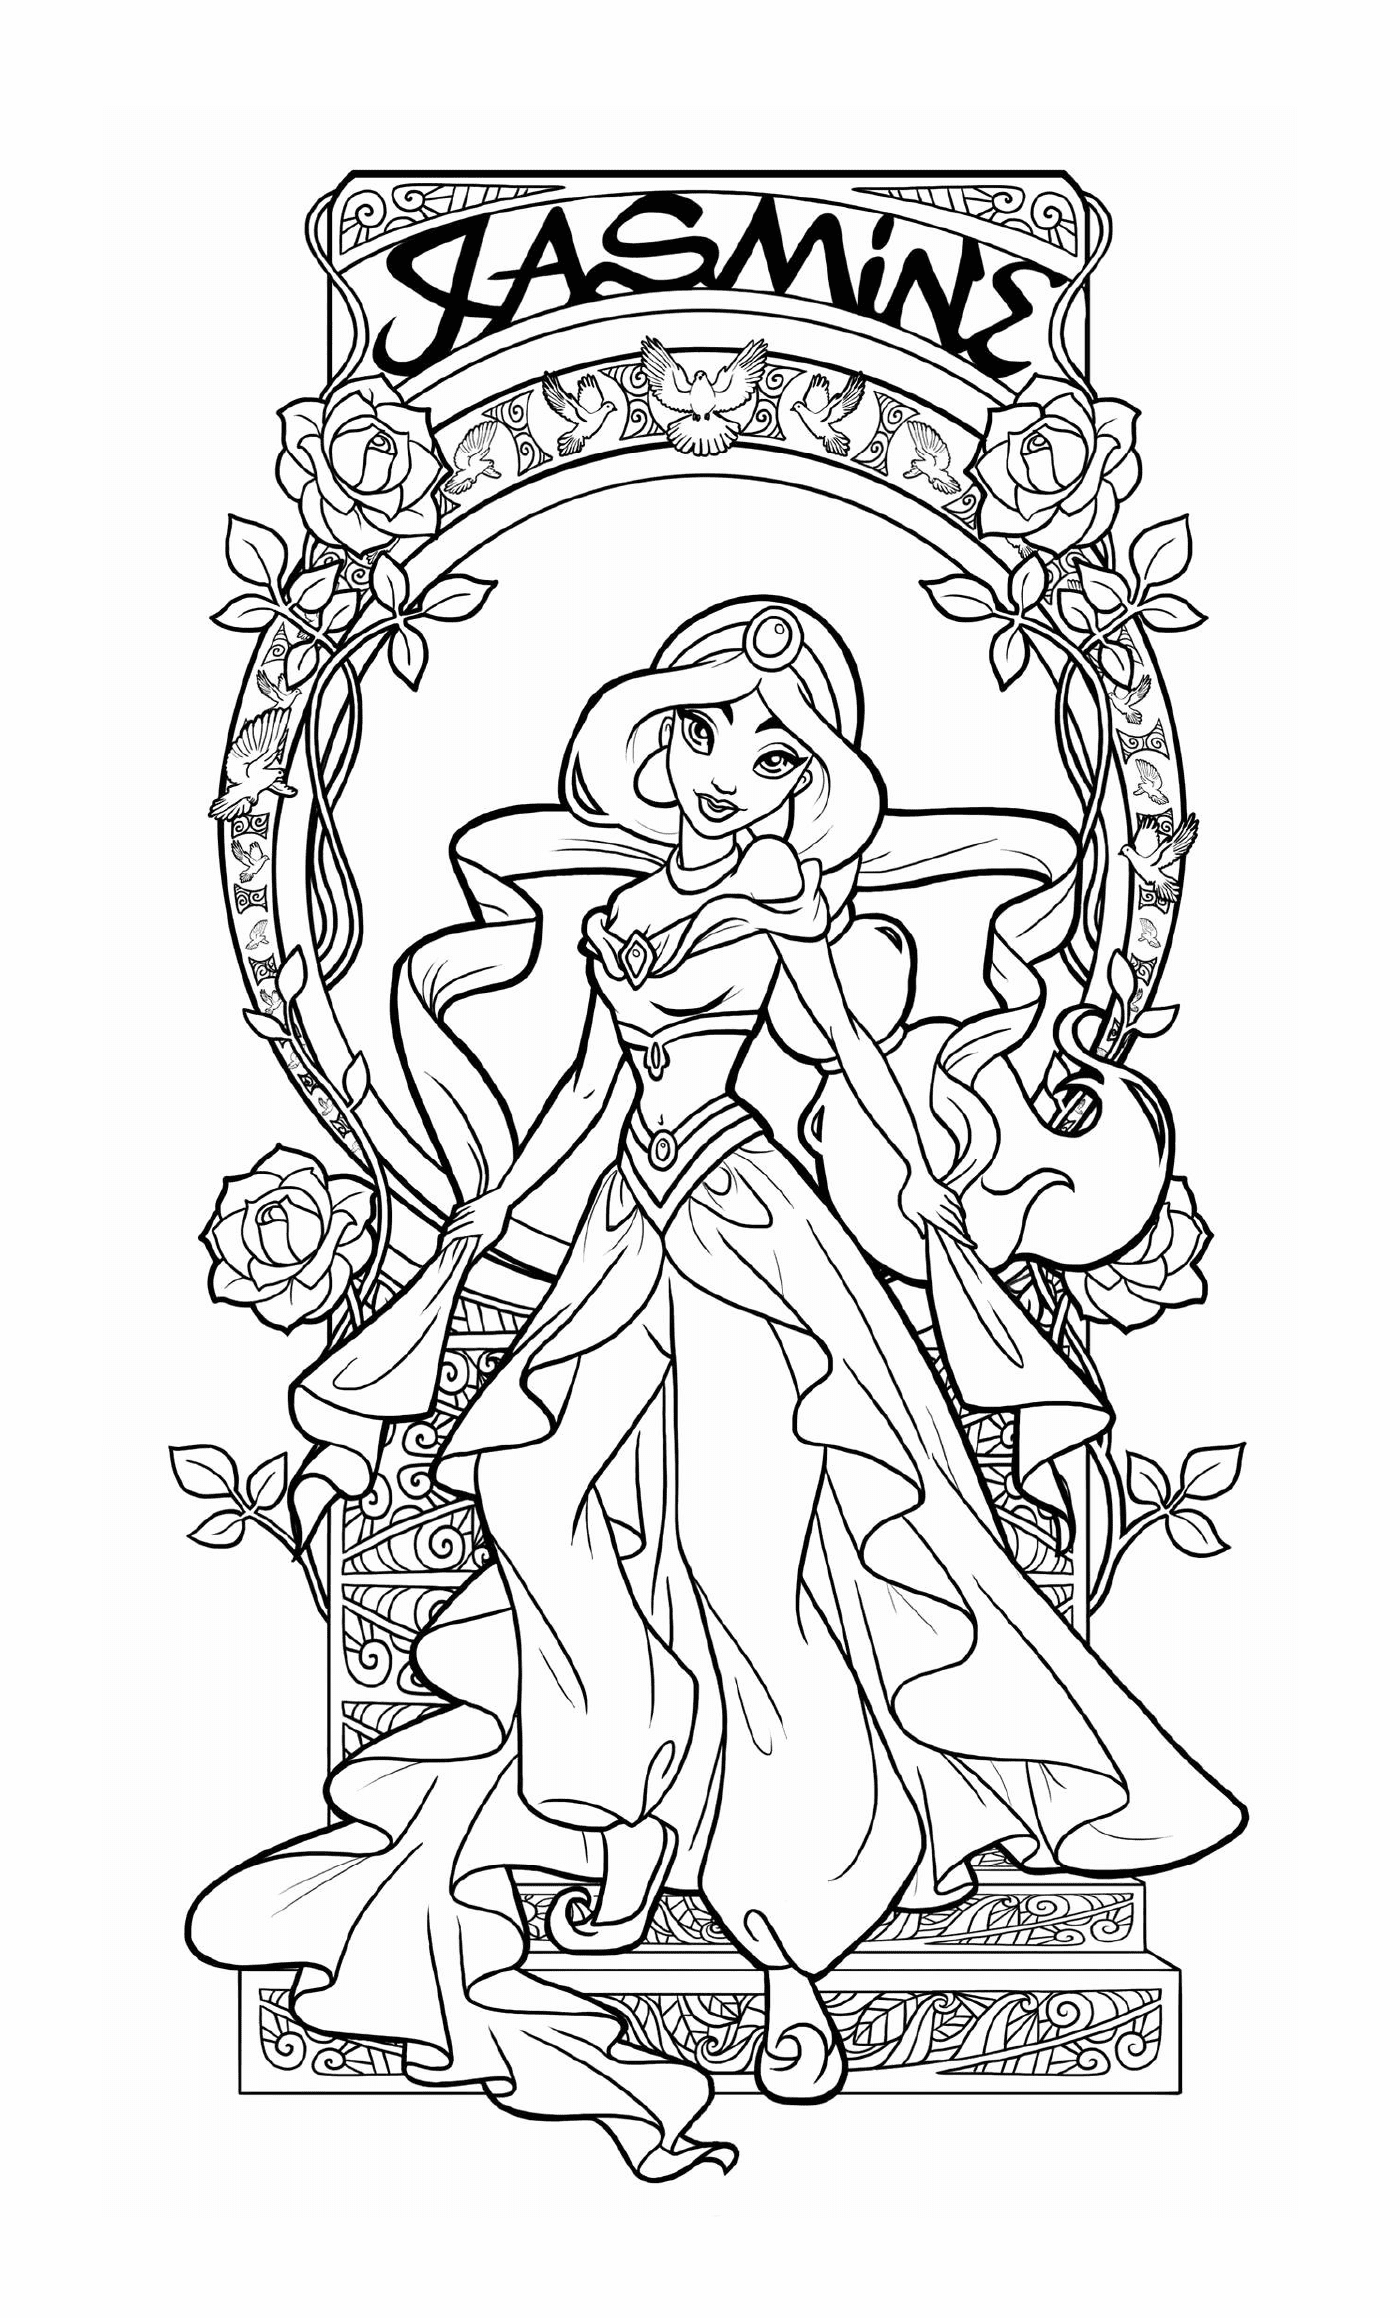  Jasmine from Aladdin, Disney's adult princess 